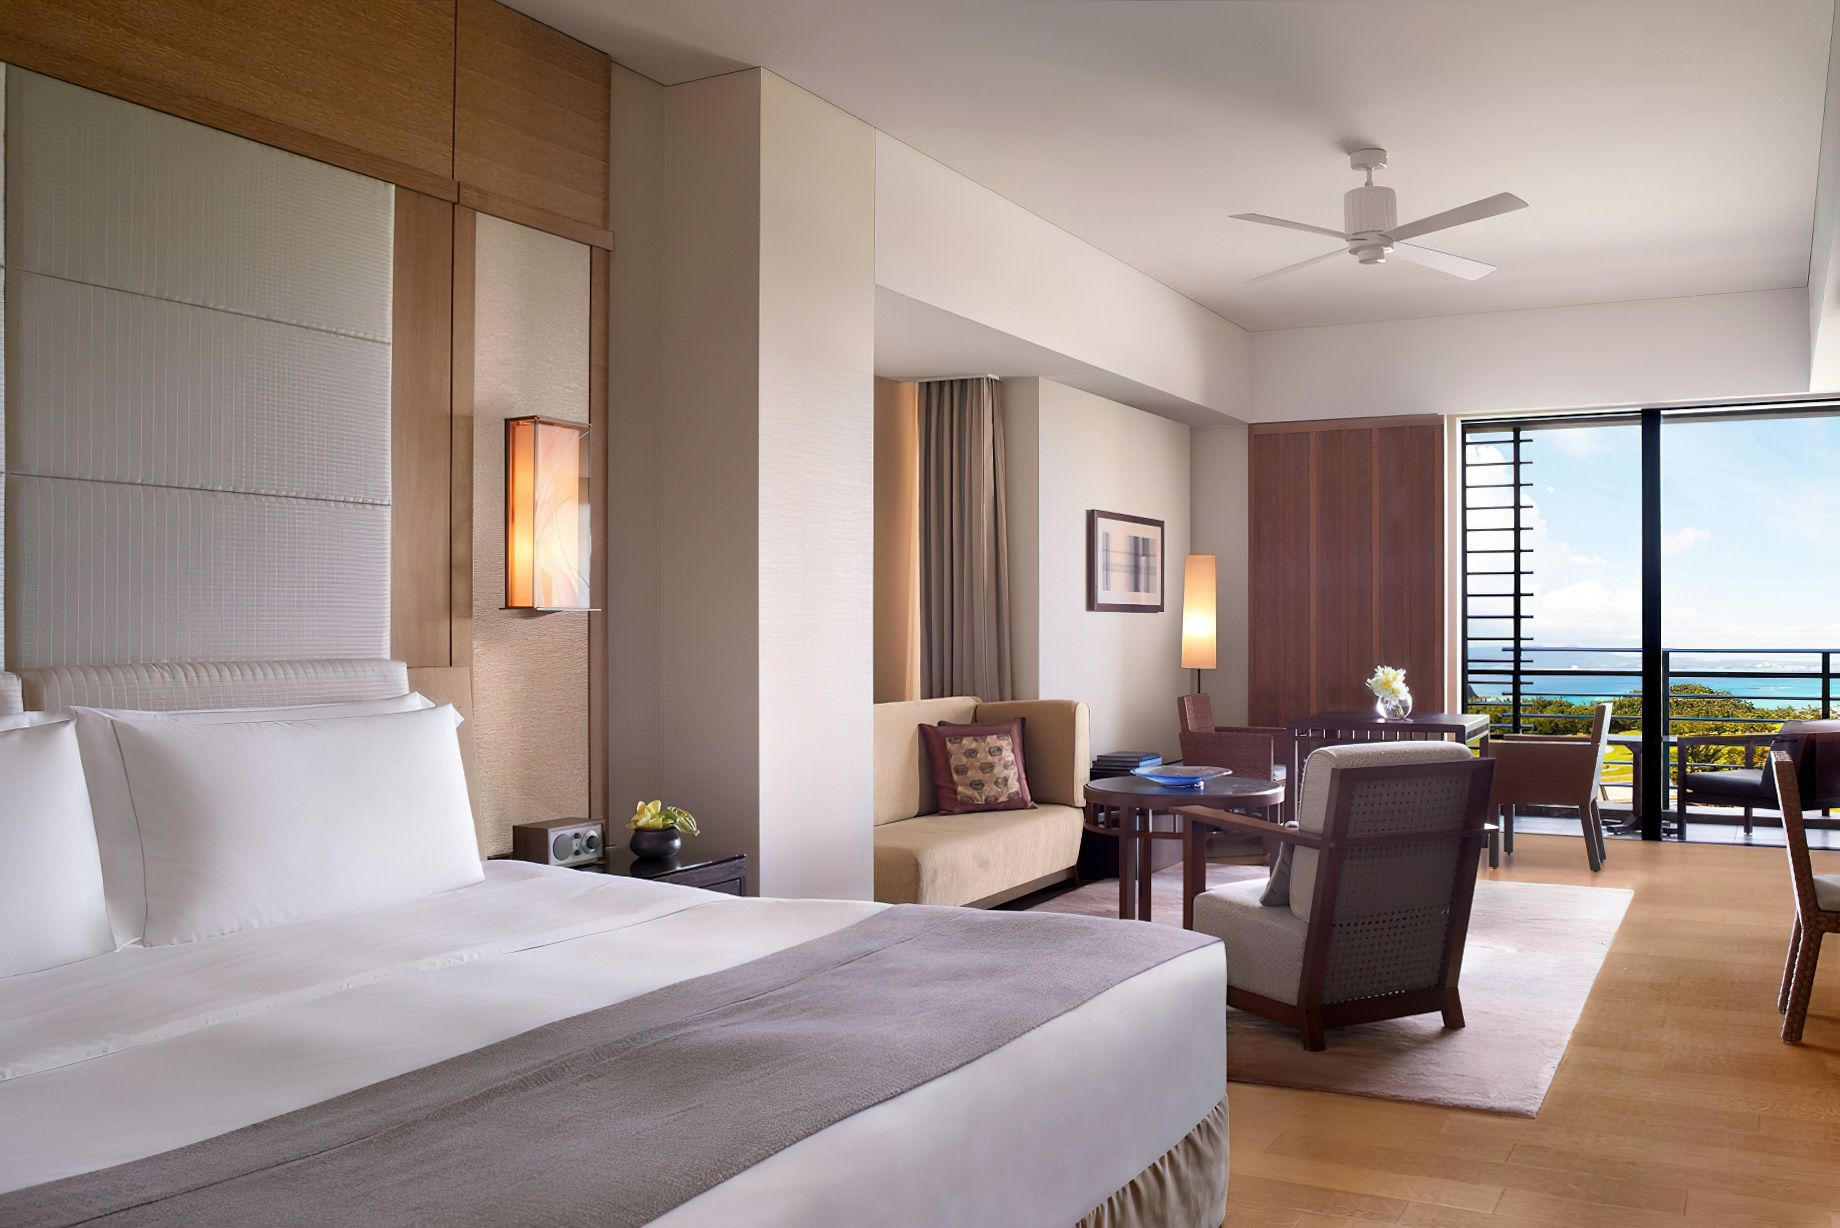 The Ritz-Carlton, Okinawa Hotel - Okinawa, Japan - Premier Deluxe Room Bed